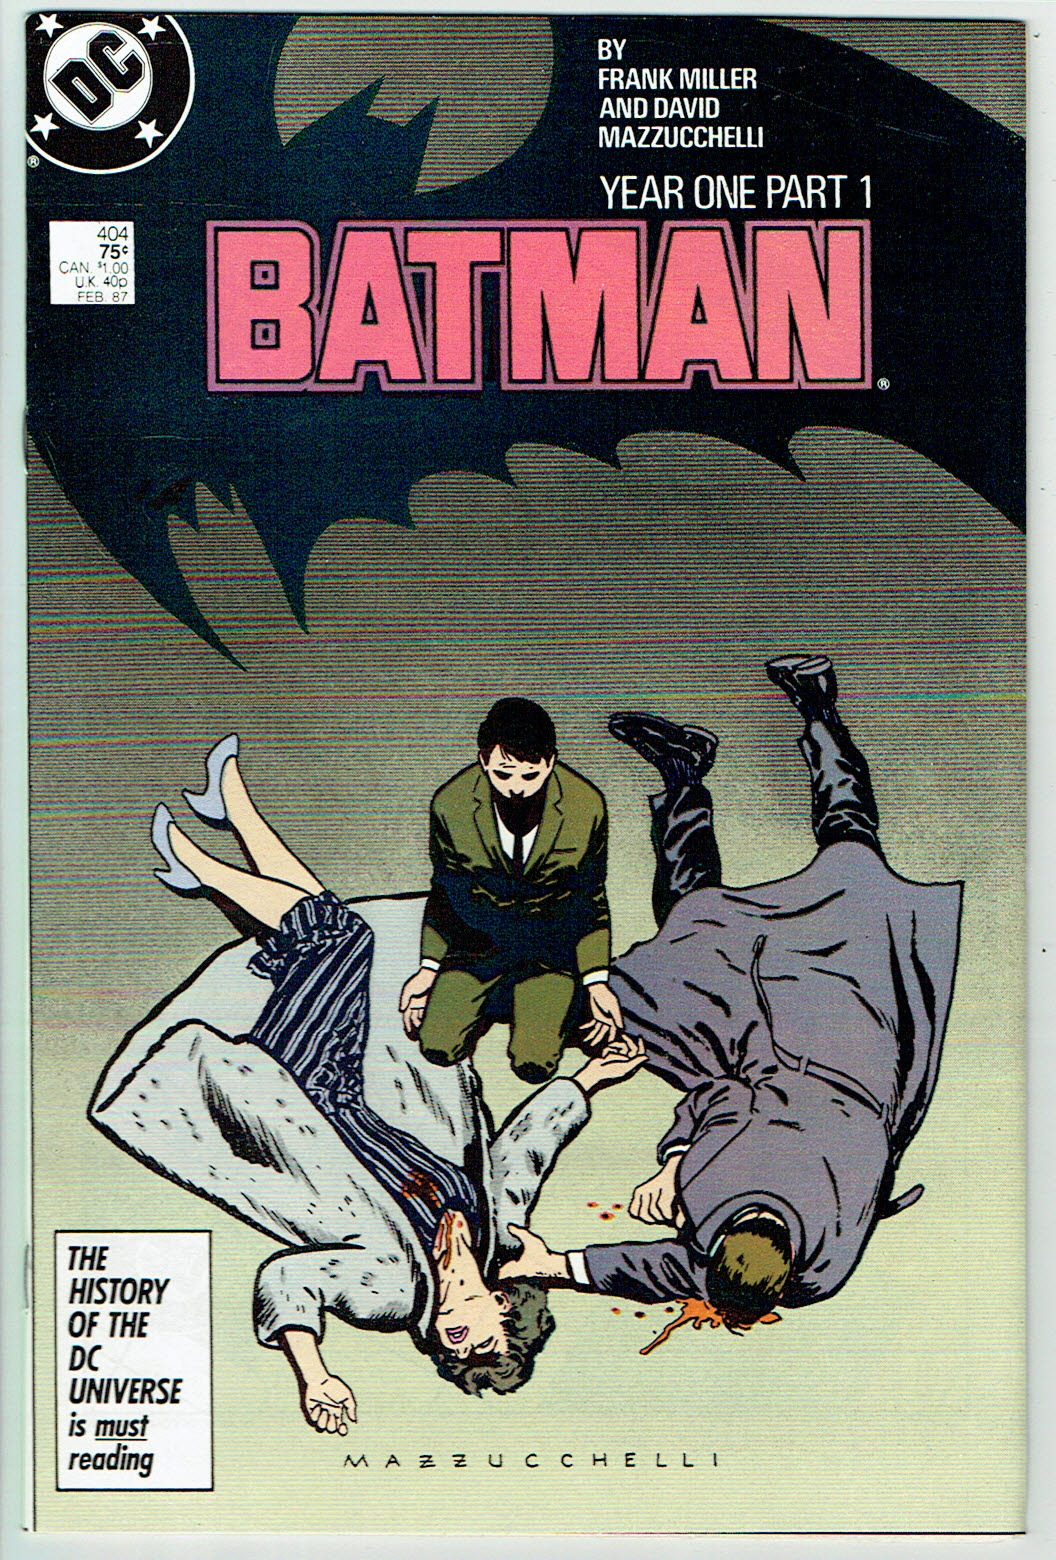 Batman #404